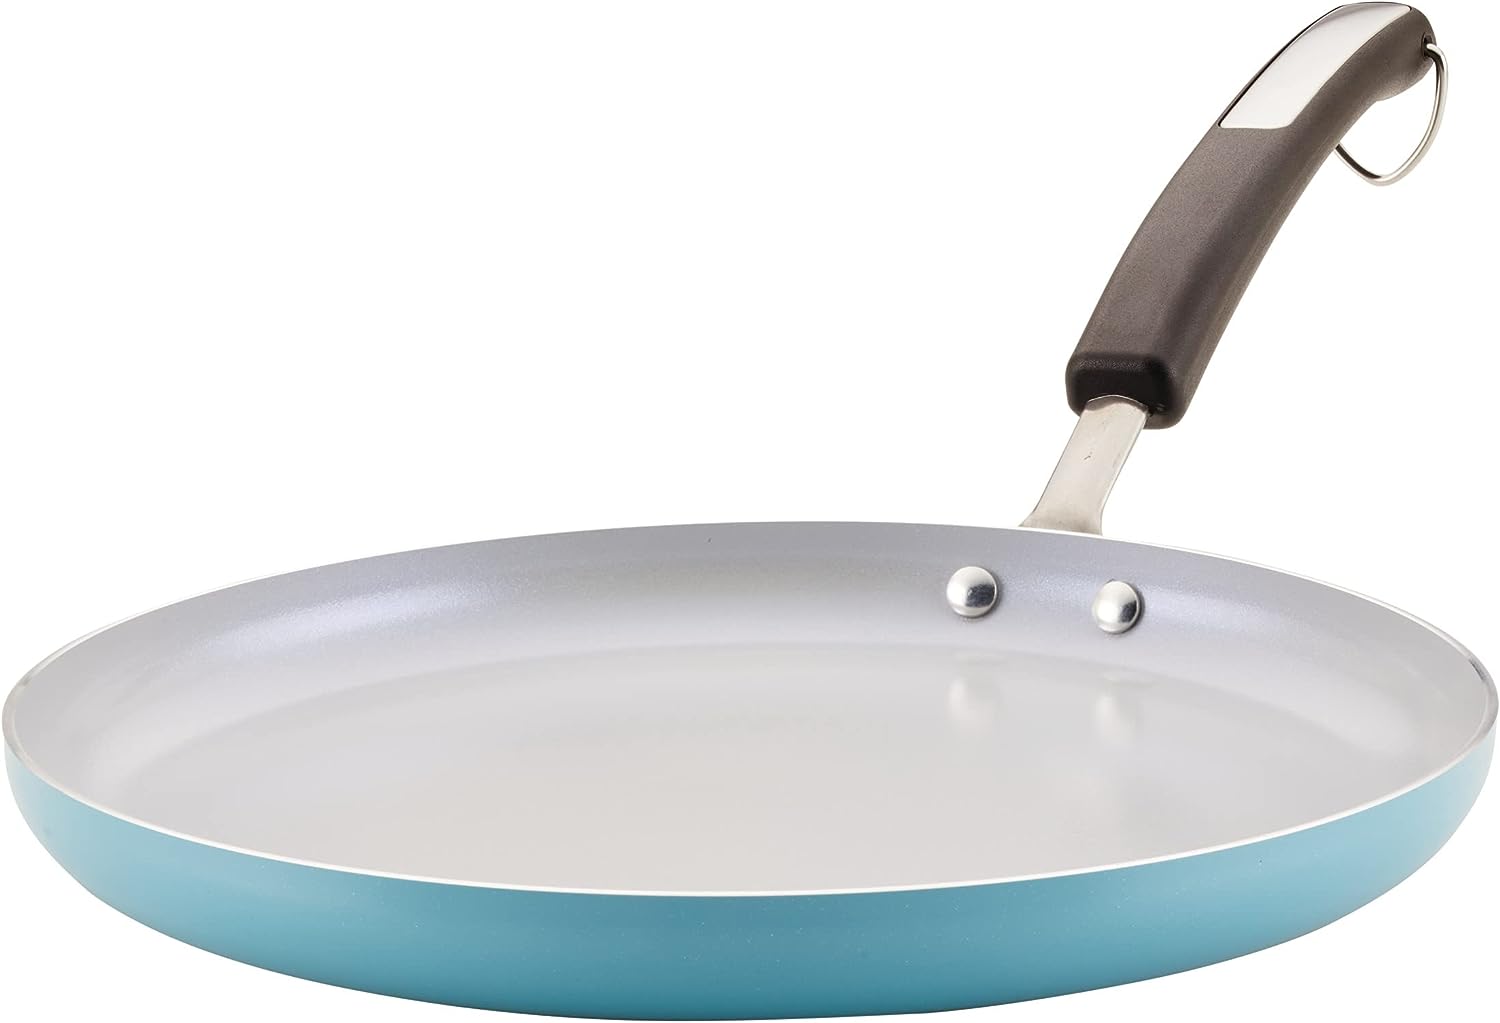 Ceramic Griddle Pan